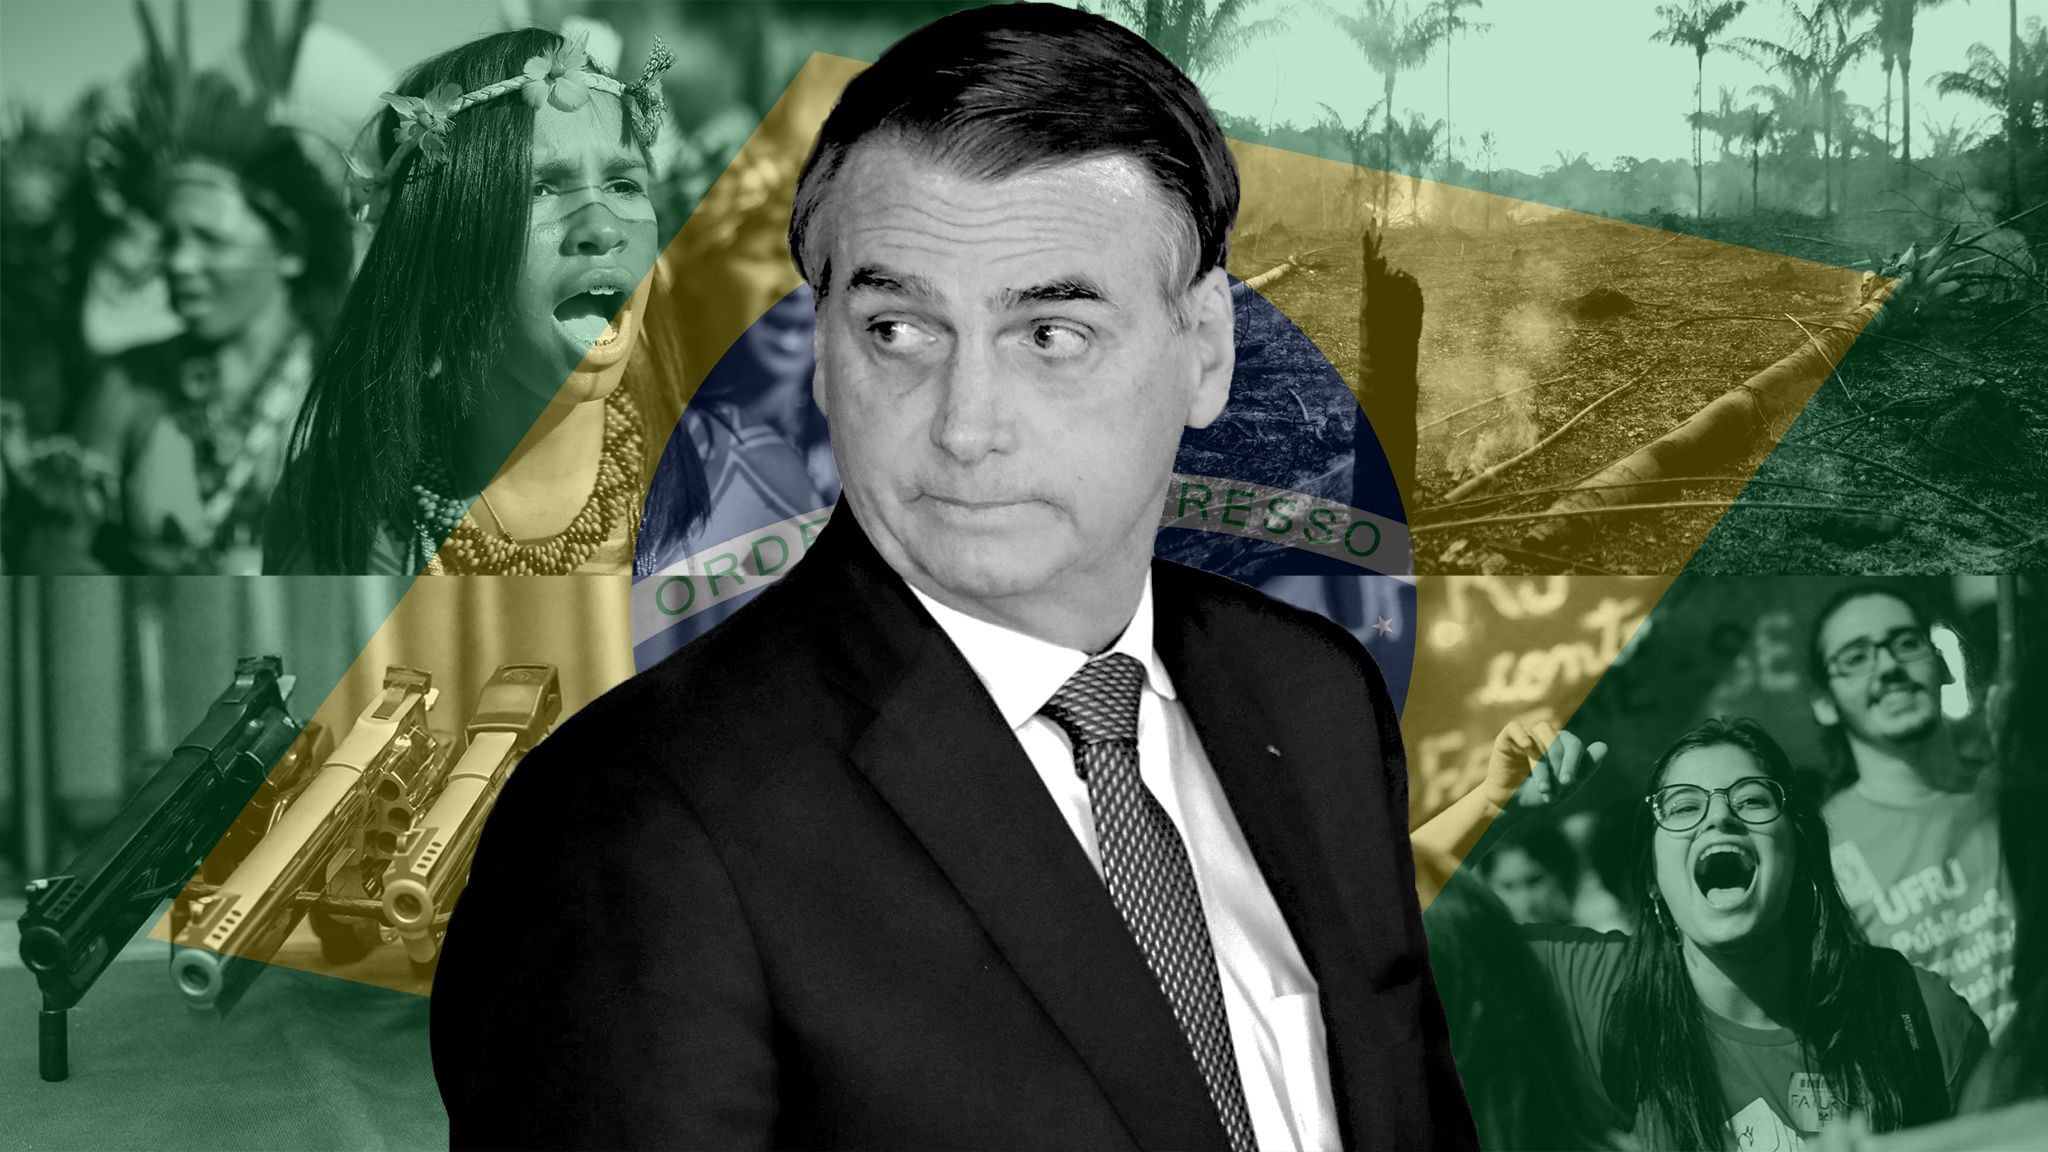 Brazil: Jair Bolsonaro pushes culture war over economic reform